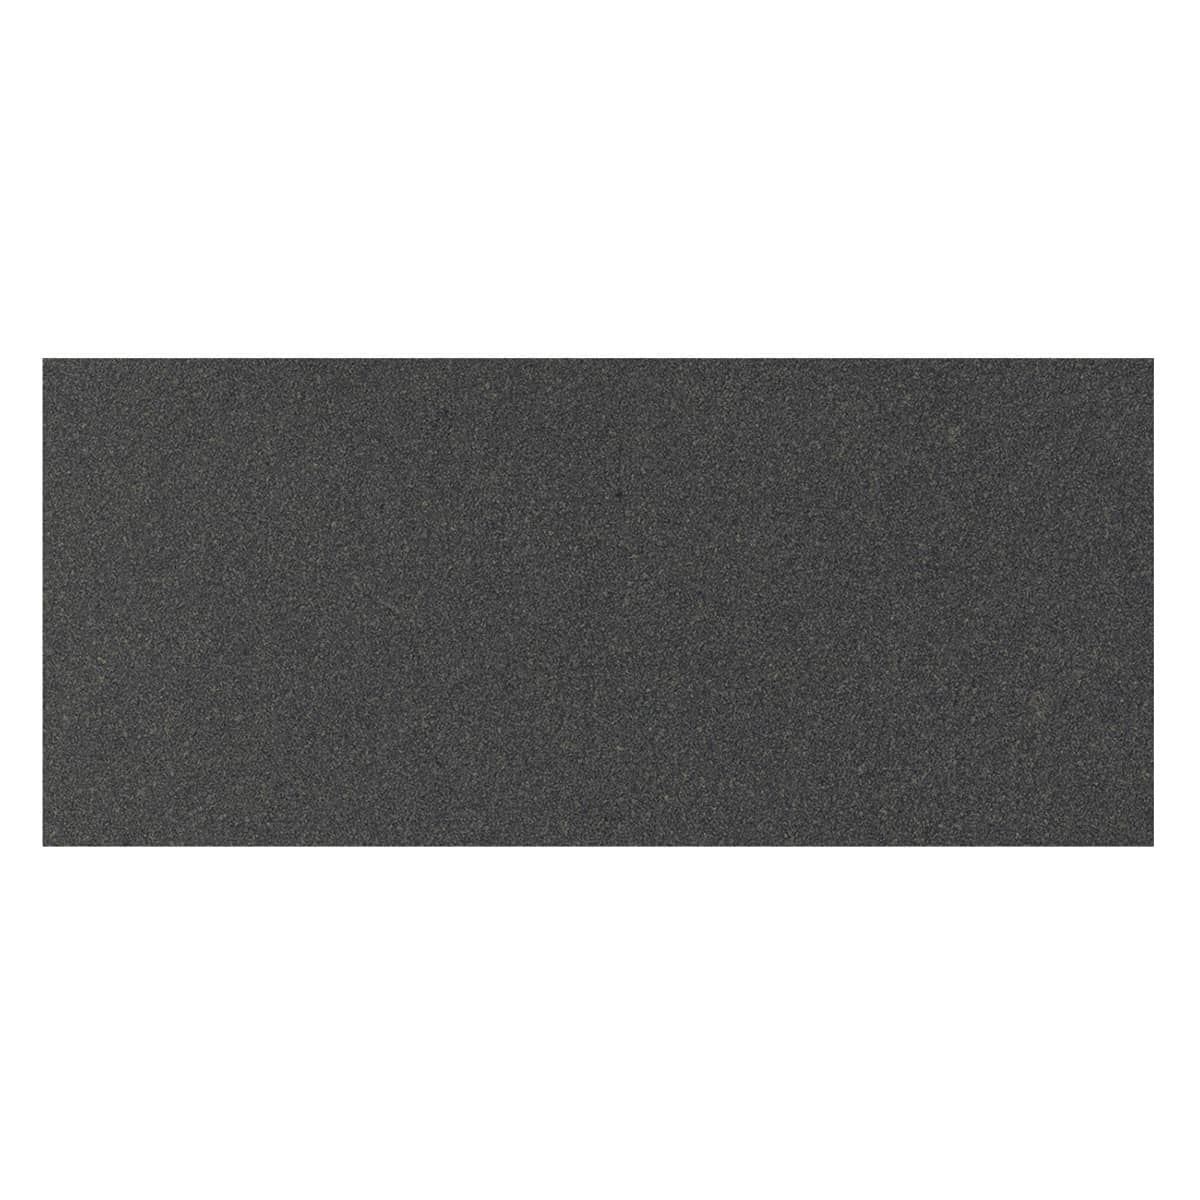 haussmann basalt grey lave grise basalt rectangle natural stone field tile 12x24 honed